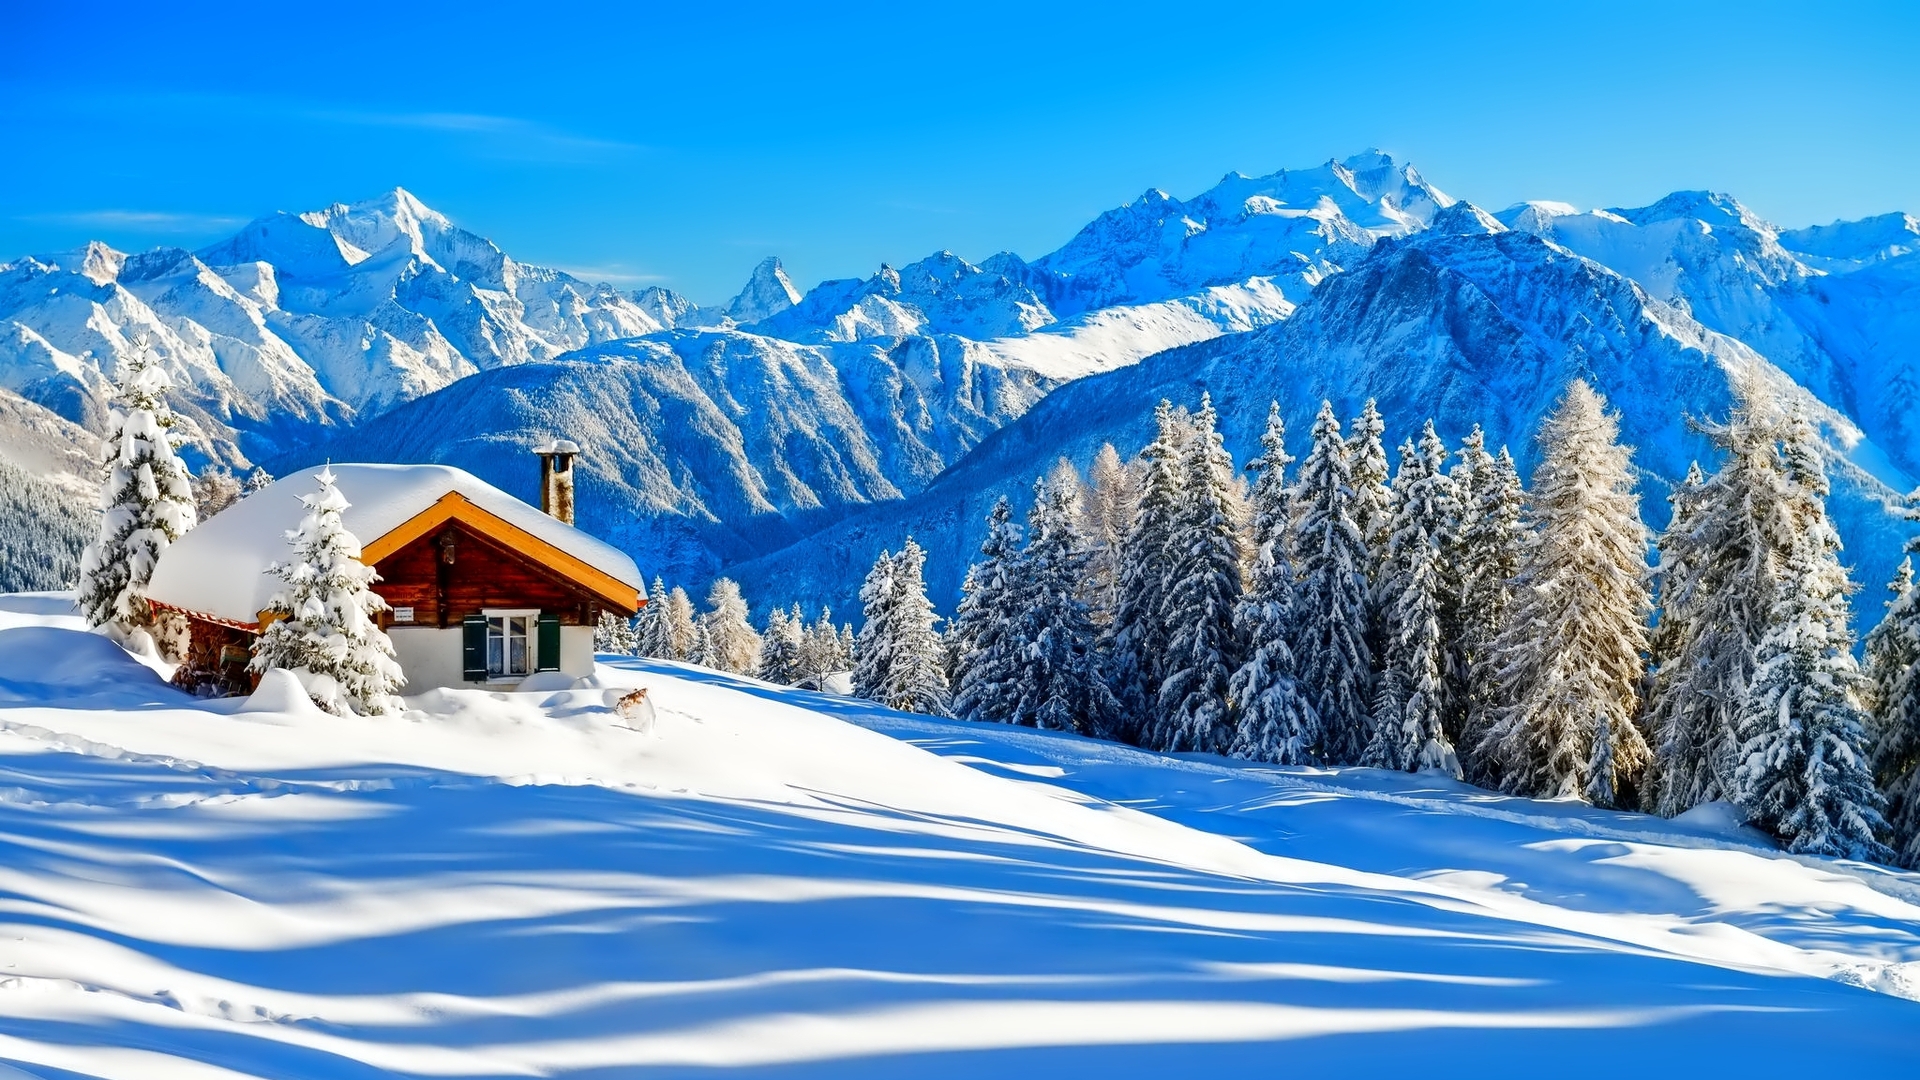 山の壁紙無料,雪,冬,山,自然の風景,山脈